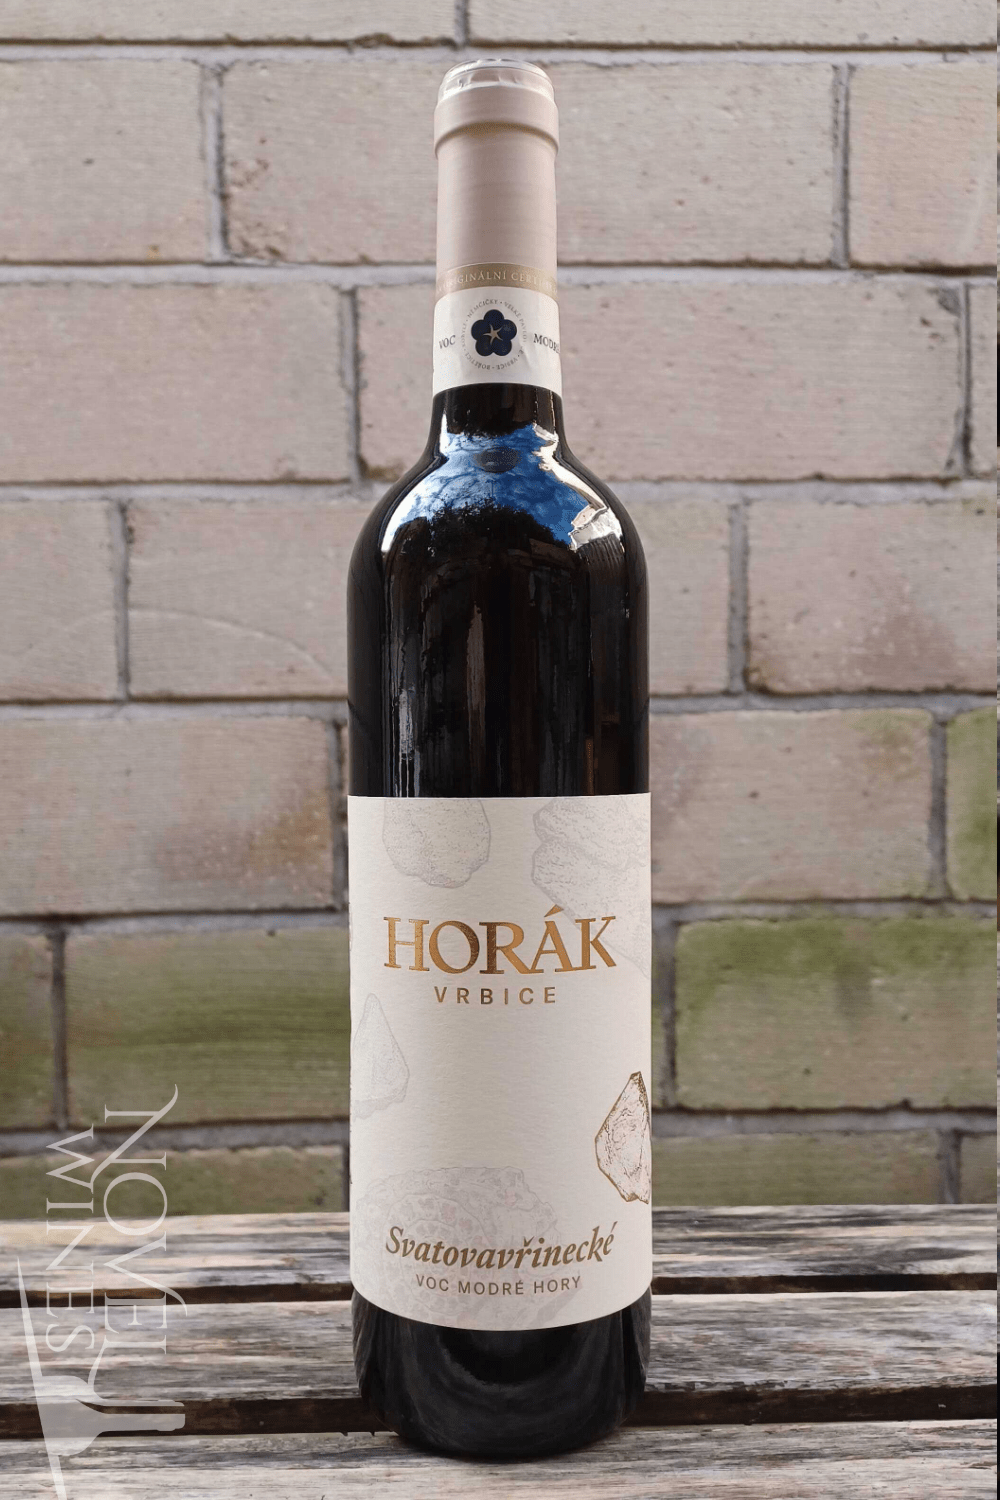 Horak Red Wine Horák Svatovavinecke VOC Modra St Laurent 2018, Czechia